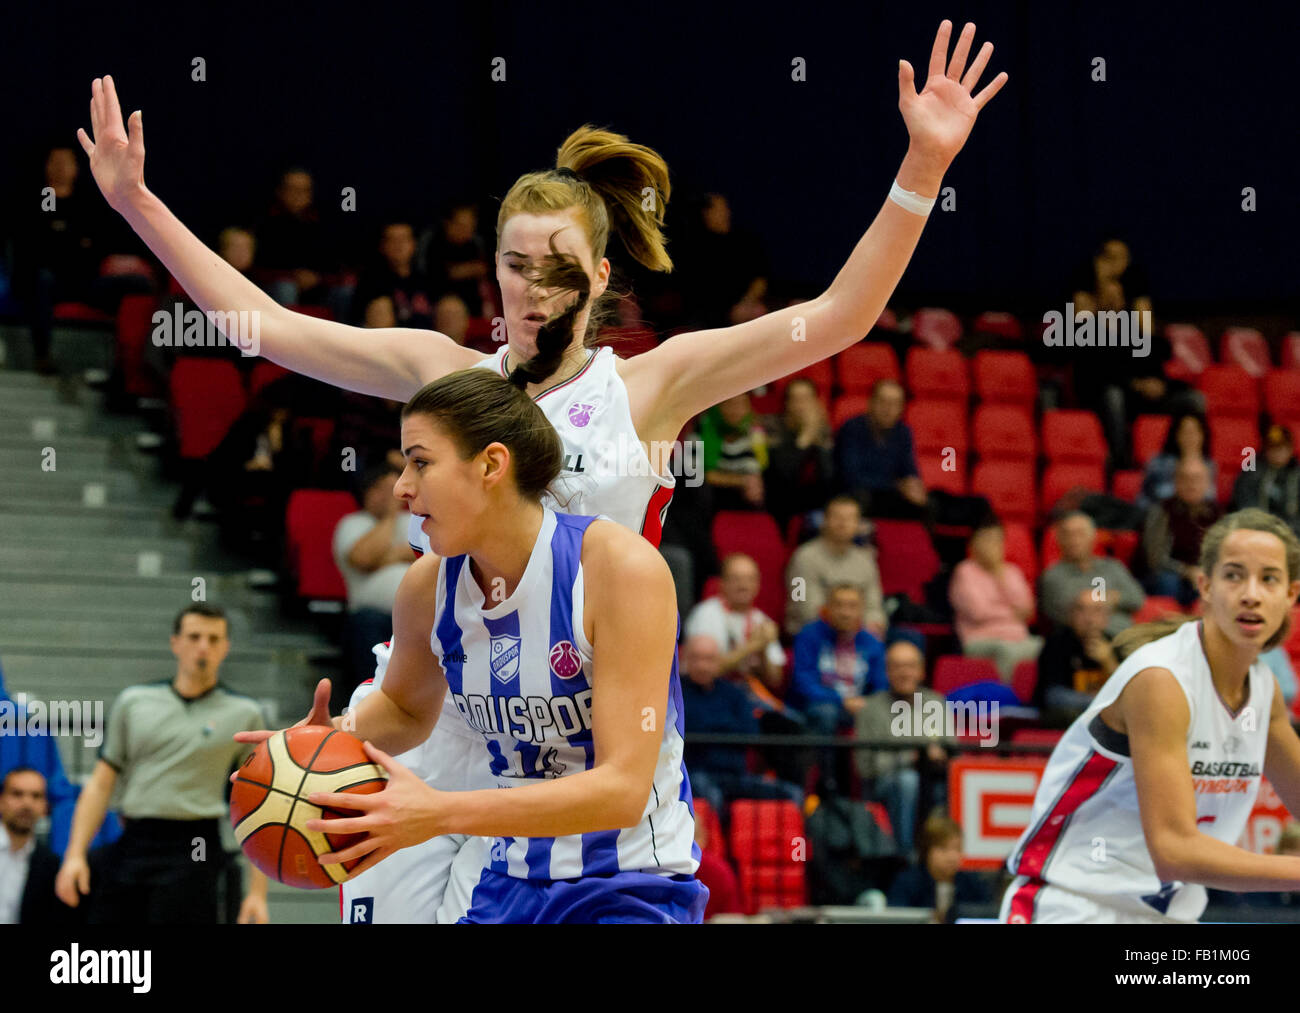 Tijana Krivacevic (front) of Orduspor and Egle Siksniute of Nymburk during the Eurocup basketball match Nymburk vs Orduspor in Nymburk, Czech Republic, January 7, 2016. (CTK Photo/Vit Simanek) Stock Photo